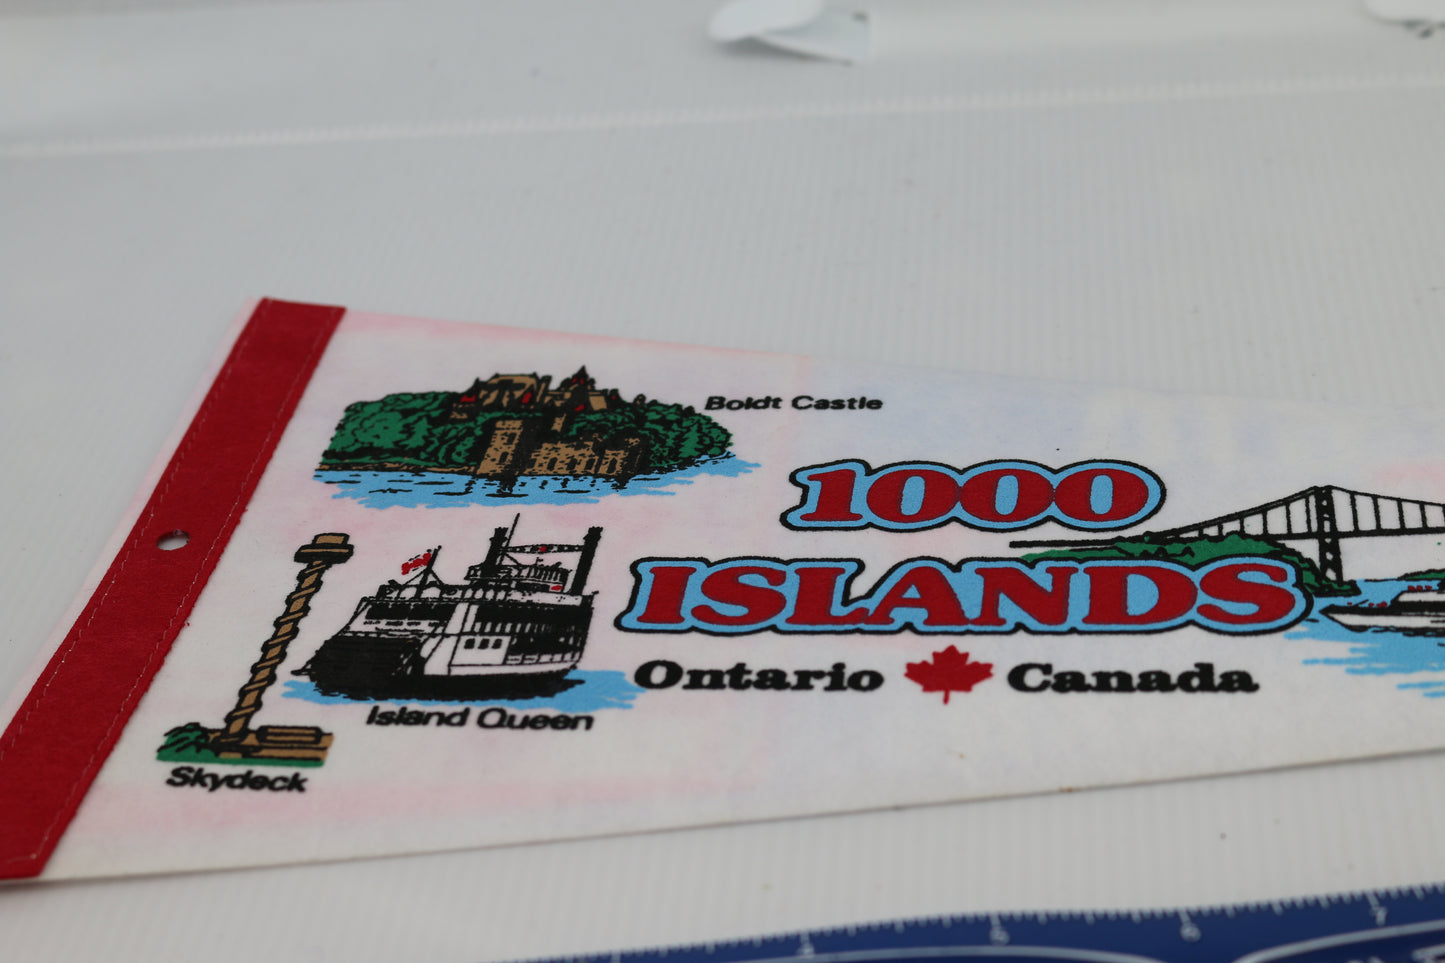 Vintage Souvenir Felt Pennant Canada 1000 Islands Ontario island Queen